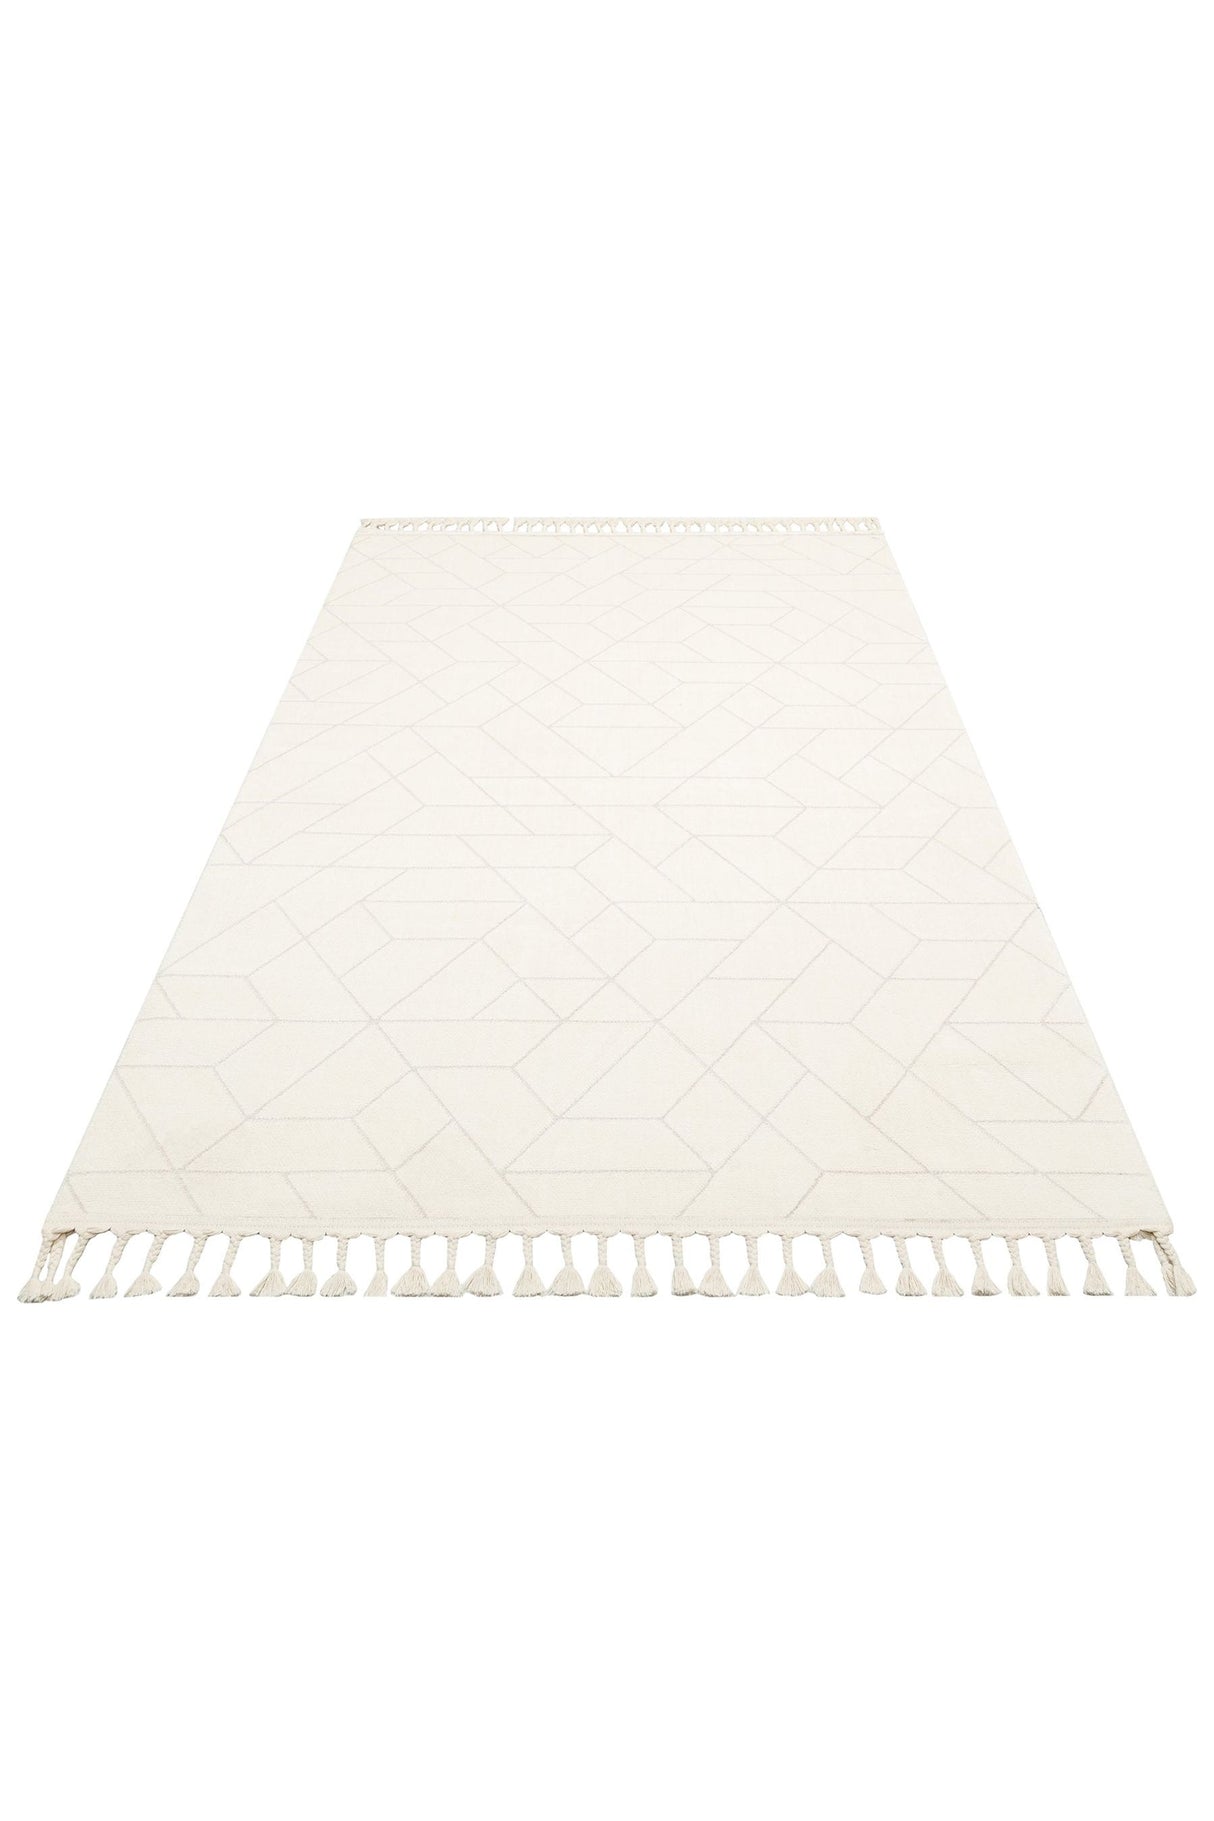 #Turkish_Carpets_Rugs# #Modern_Carpets# #Abrash_Carpets#Urb 03 White